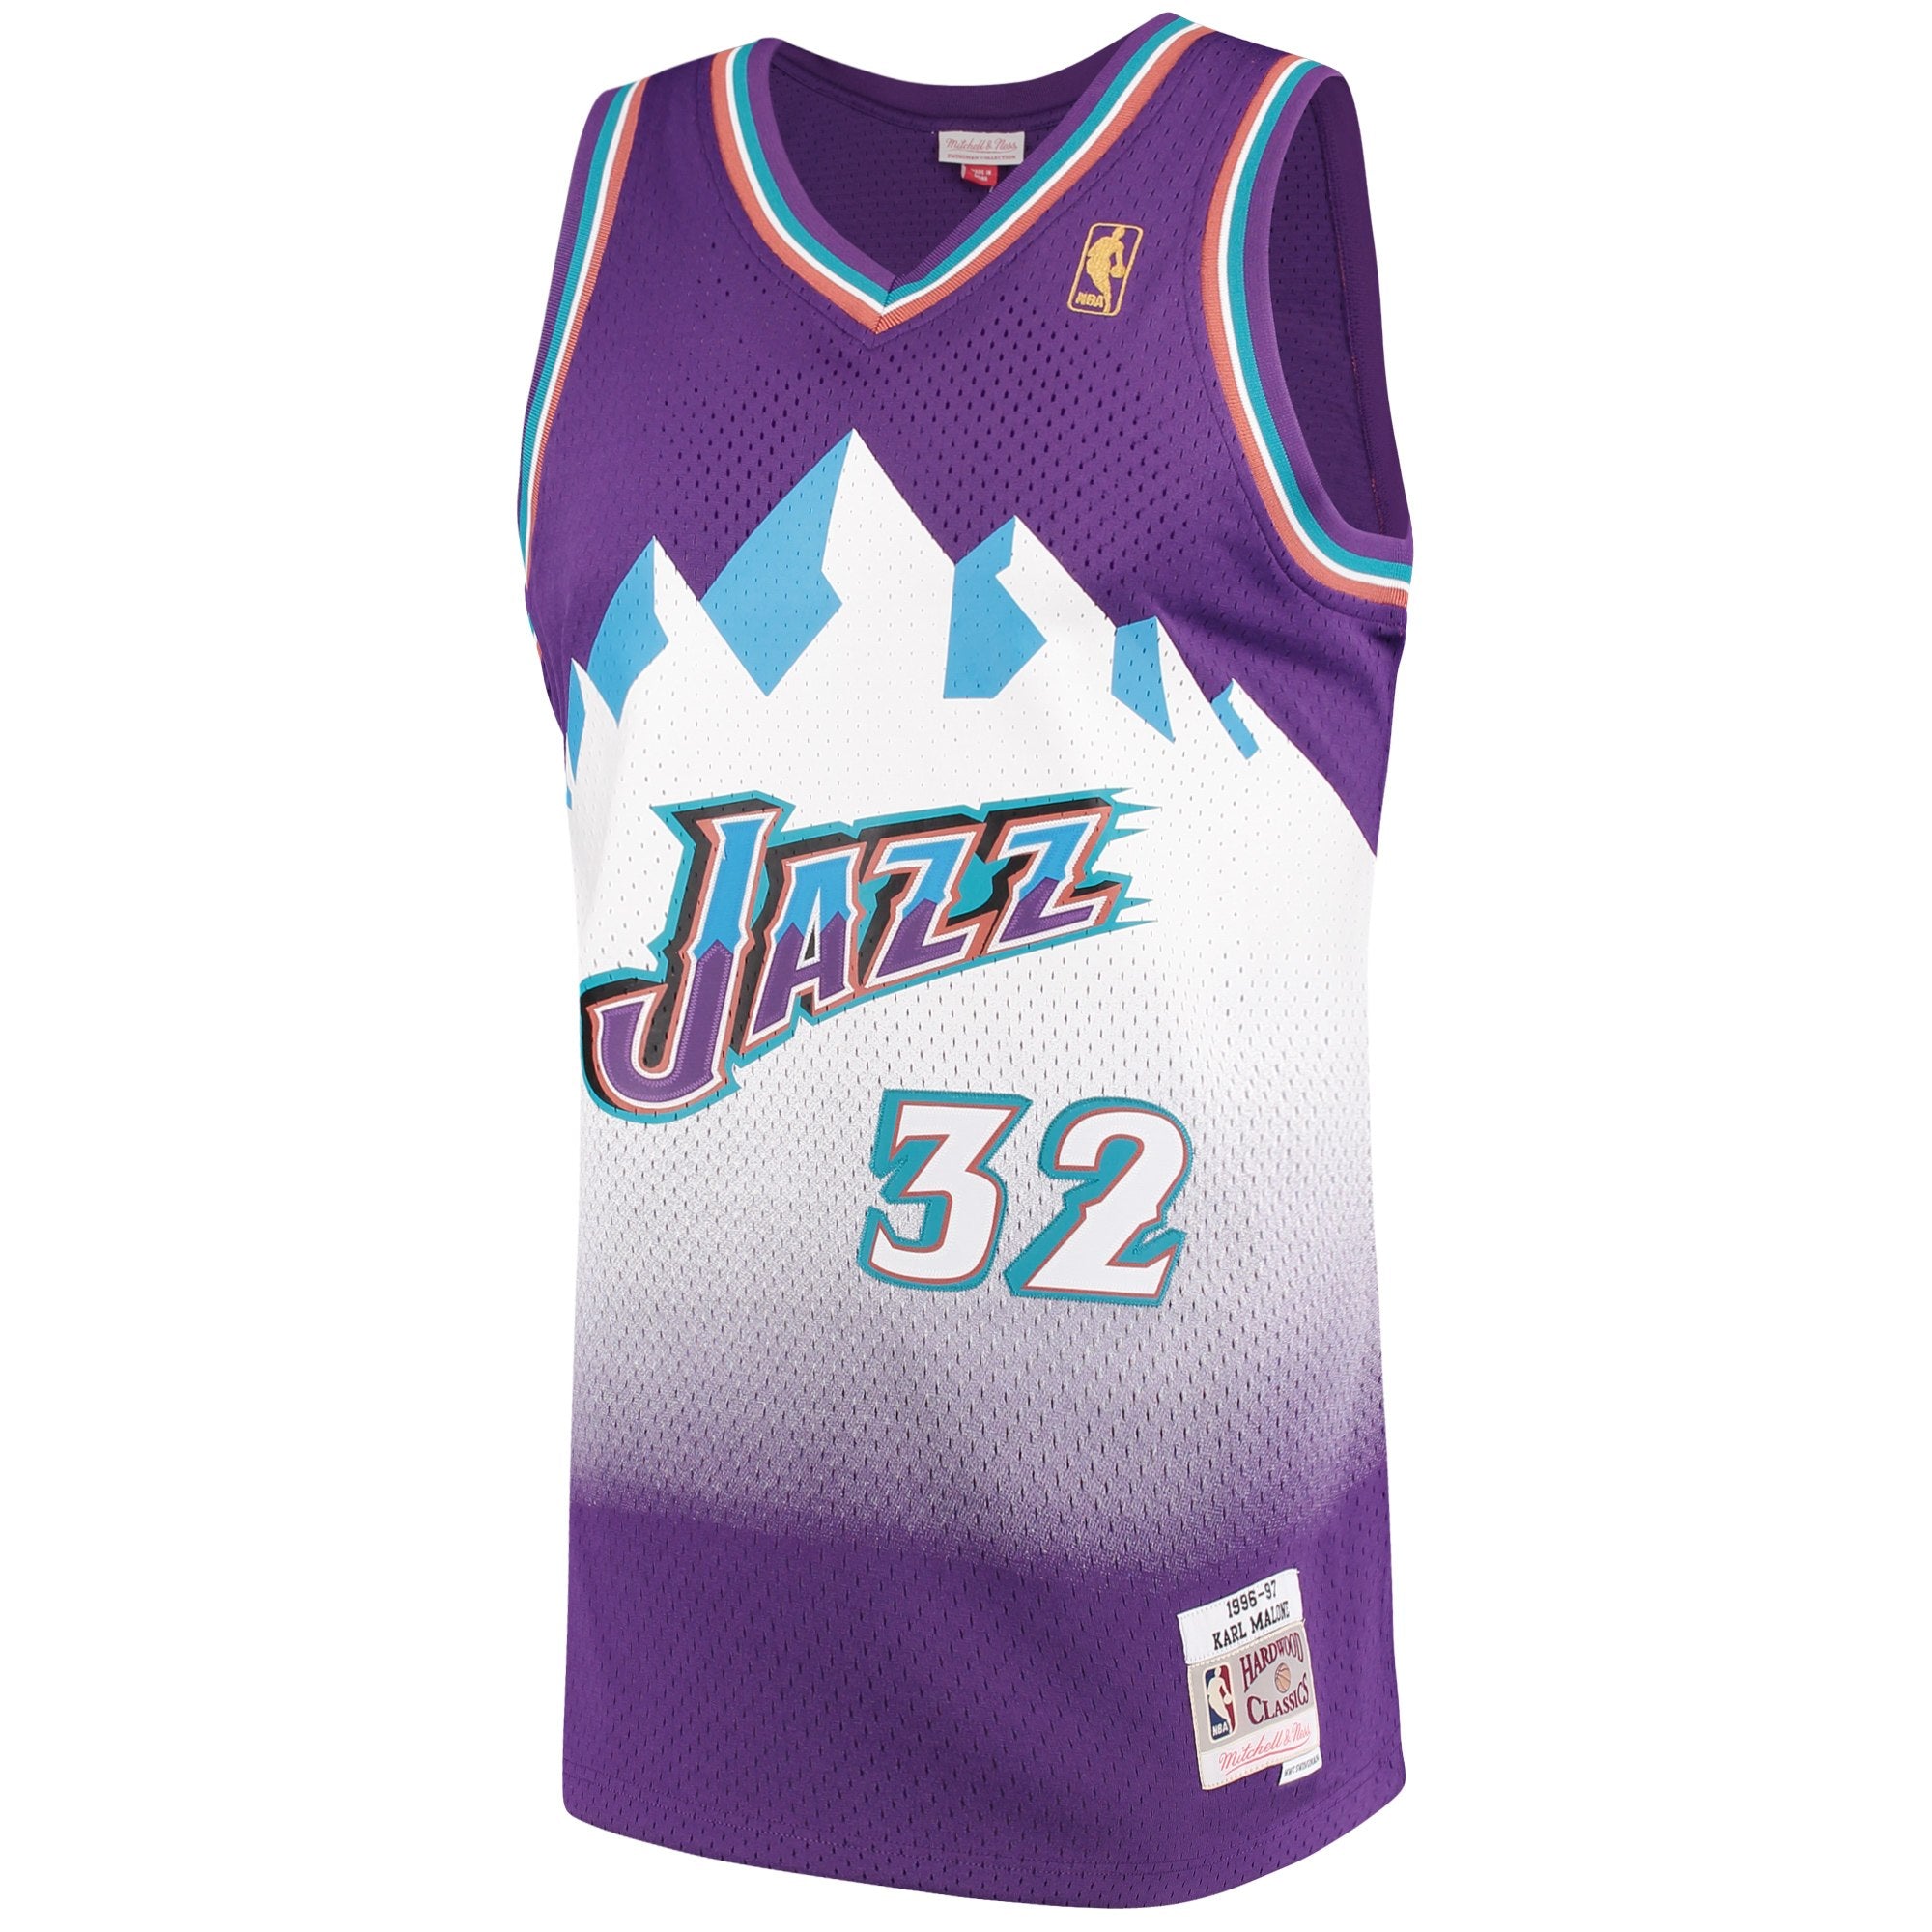 Karl Malone Size XL NBA Jerseys for sale